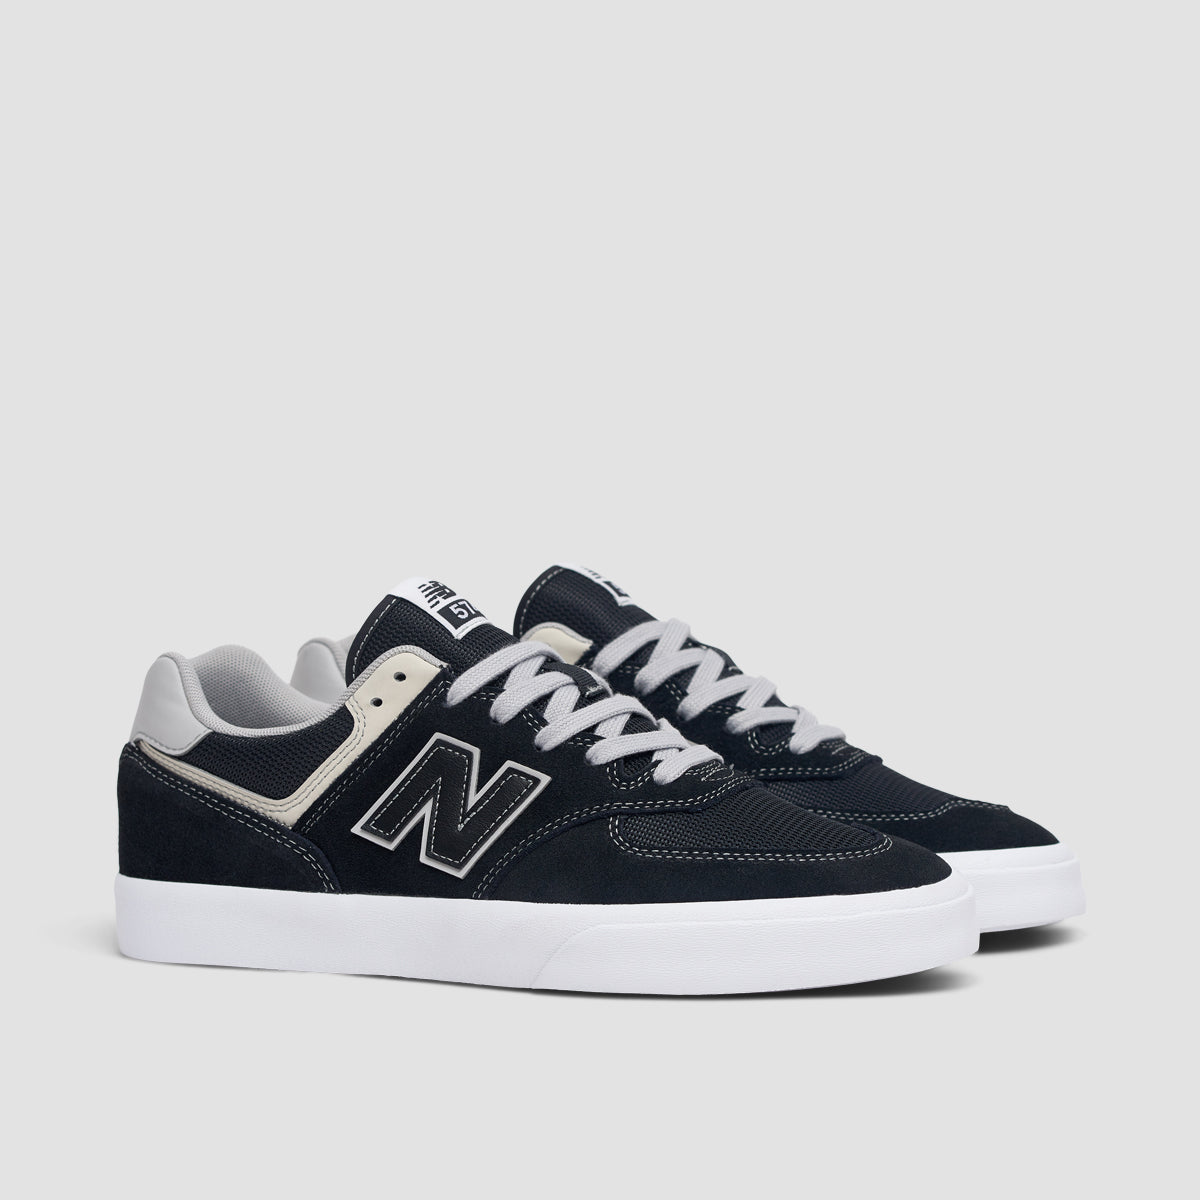 New Balance Numeric 574 Vulc Shoes - Black/Grey